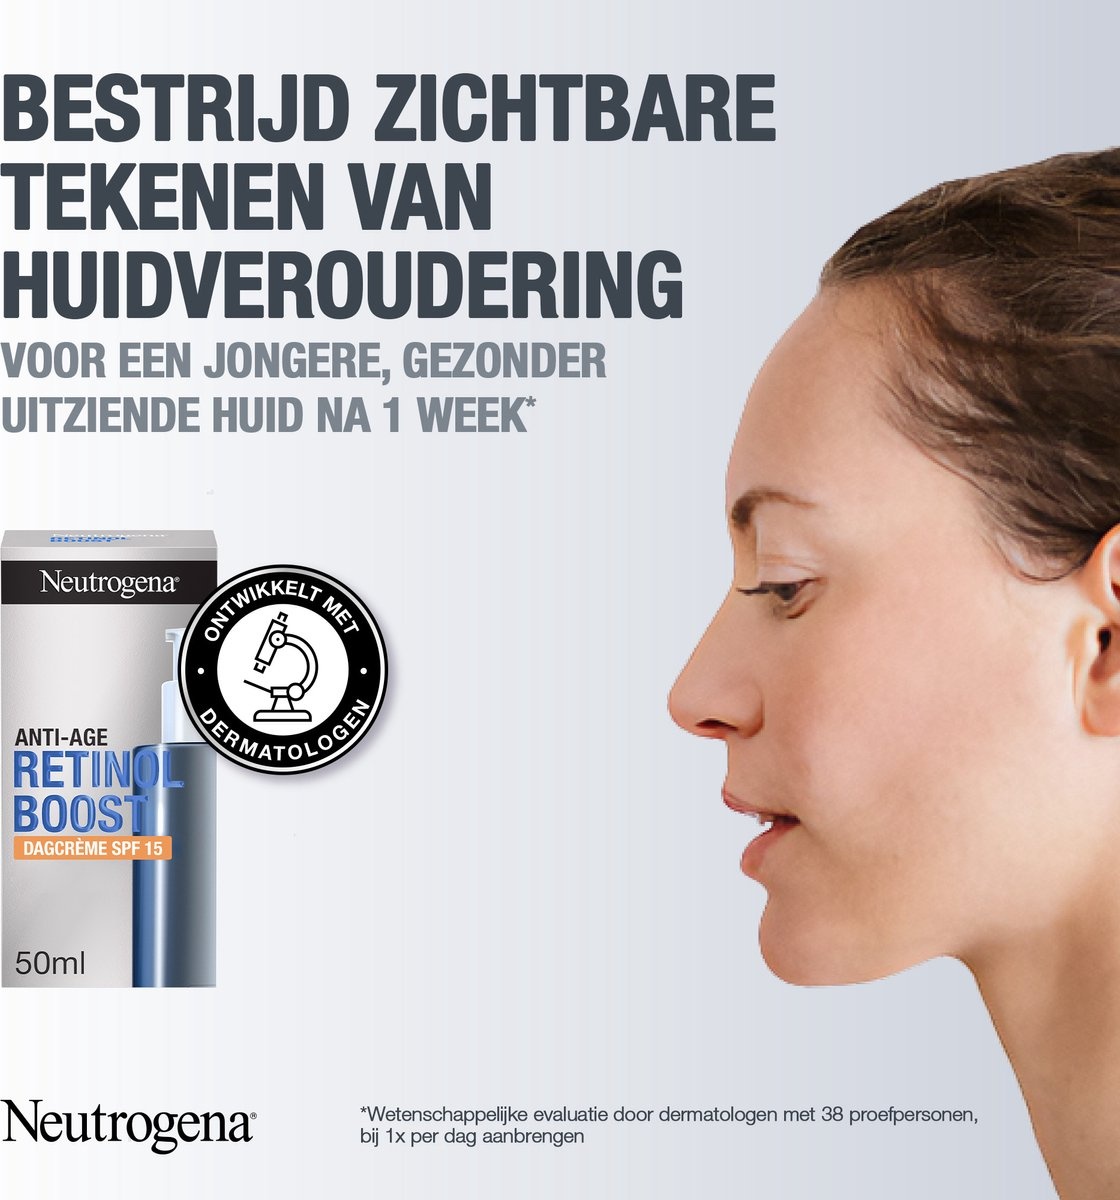 Neutrogena Retinol Boost Day Cream SFP 15 (50ml) - Verpakking beschadigd